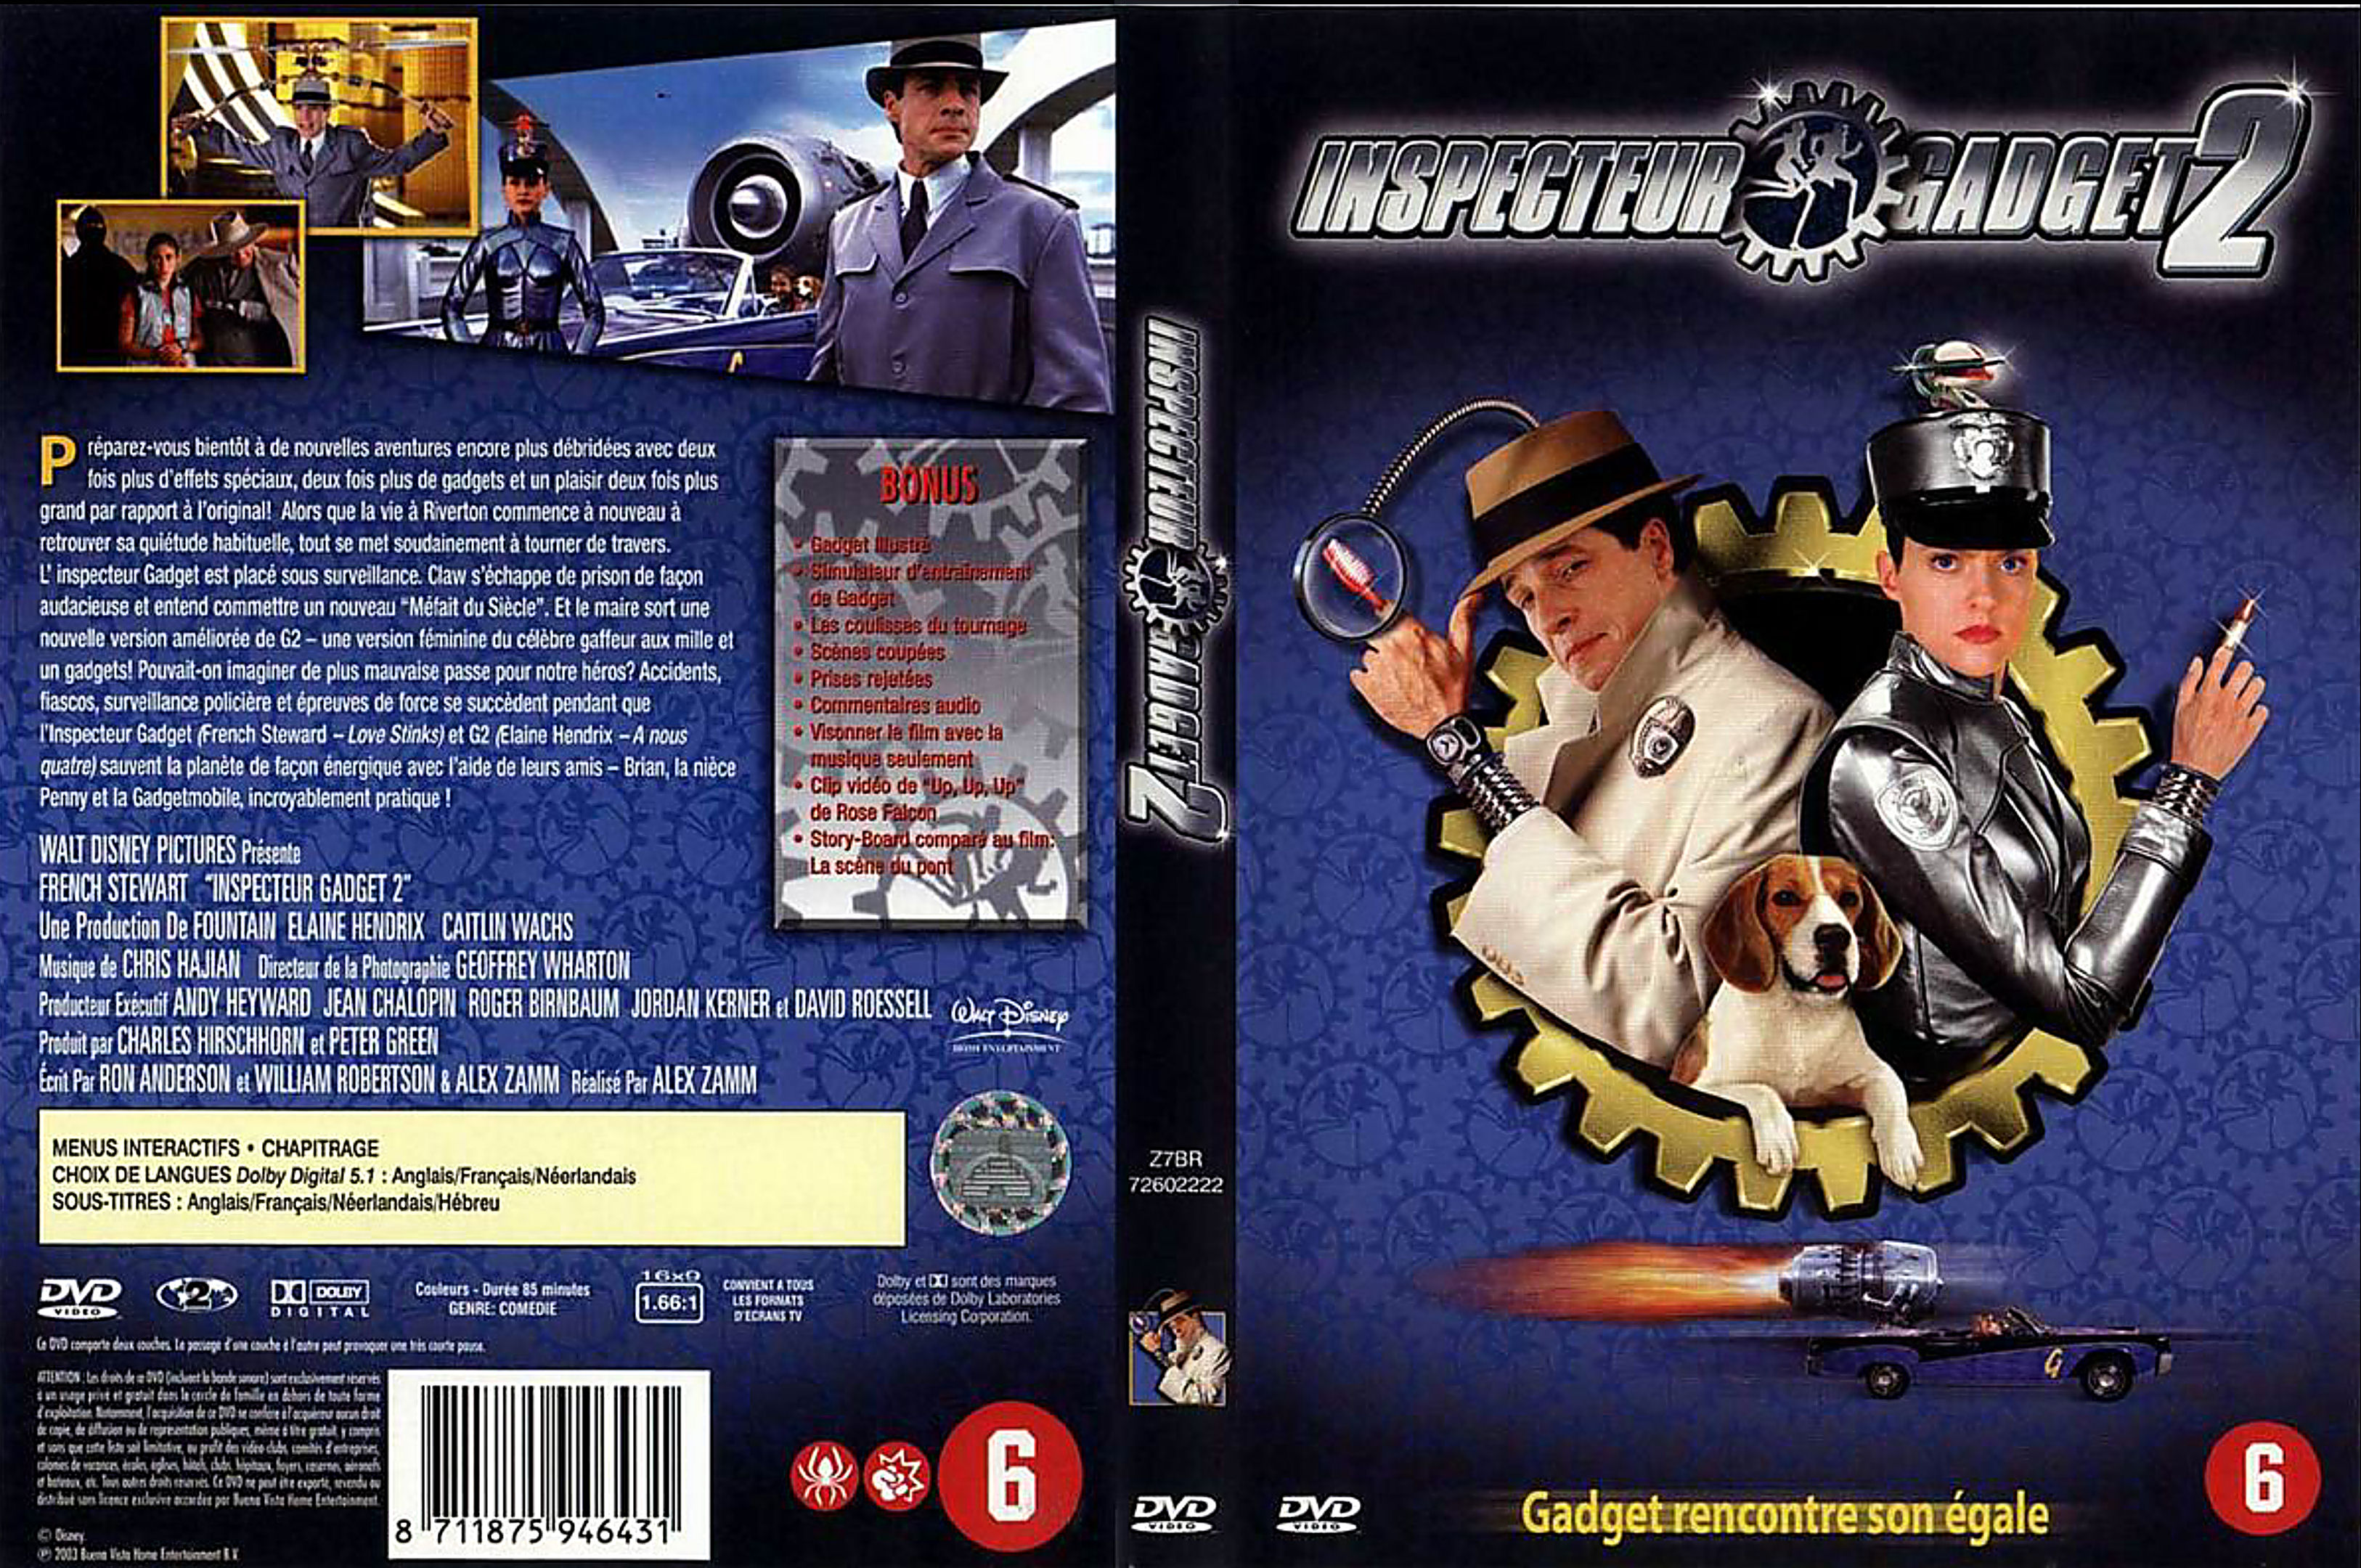 Jaquette DVD Inspecteur Gadget 2 v4